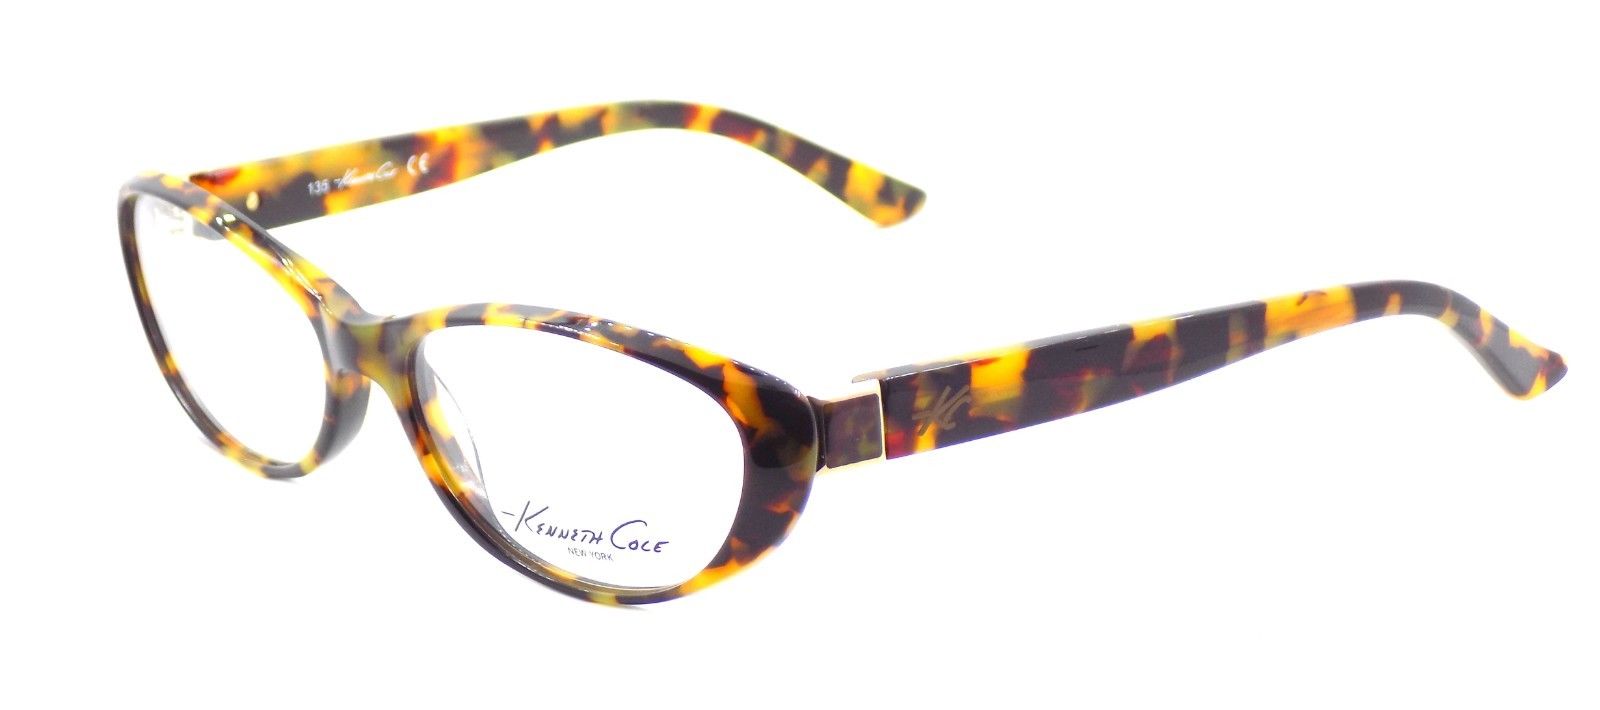 1-Kenneth Cole NY KC189 055 Women's Eyeglasses Frames 53-15-135 Tortoise + CASE-726773217079-IKSpecs